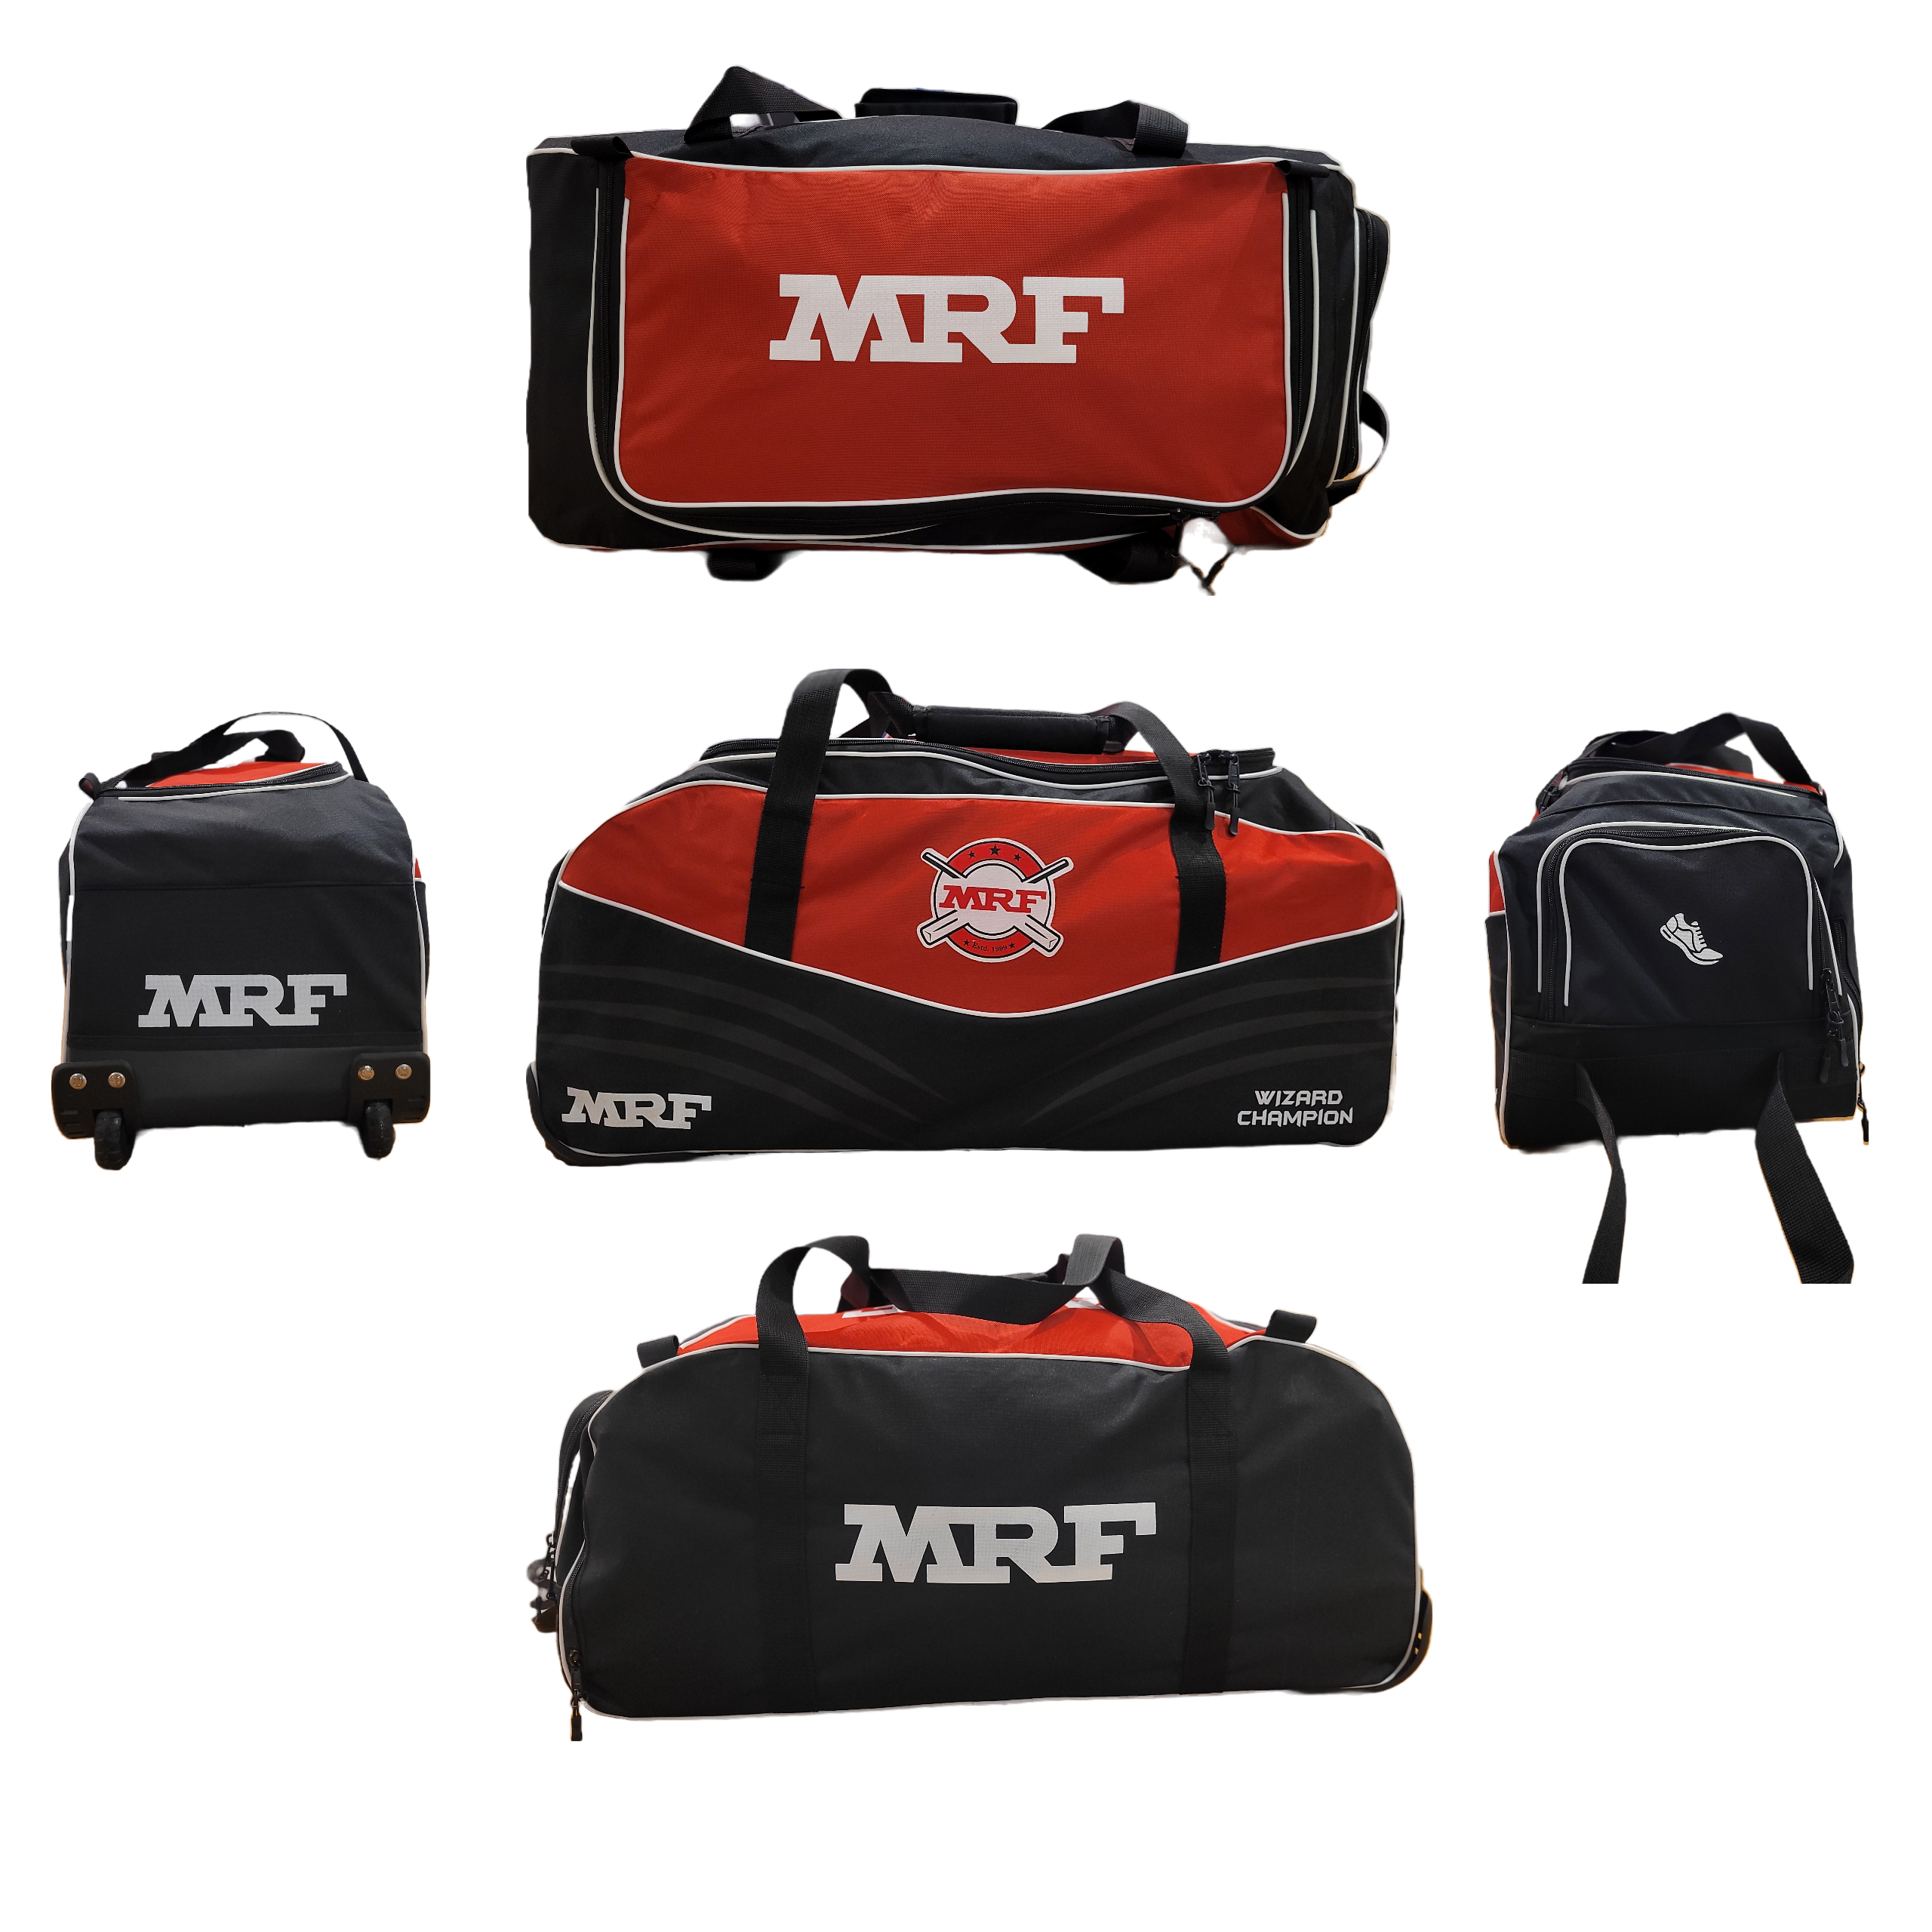 MRF-Wizard-Champion-Kit-Bag